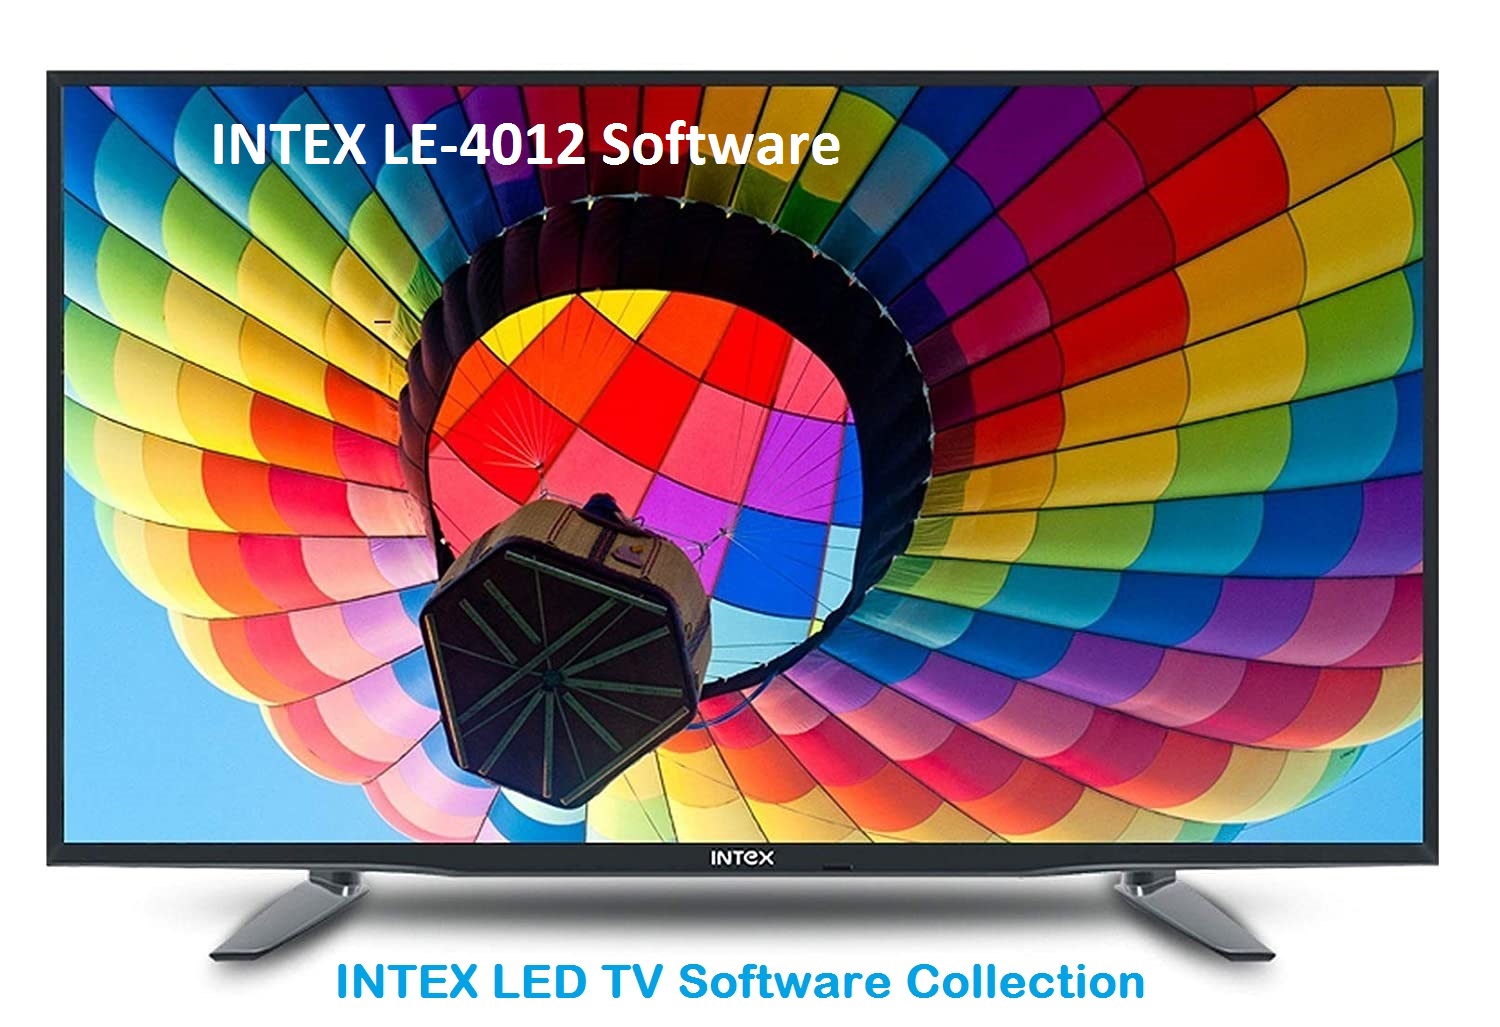 Intex Le-4012